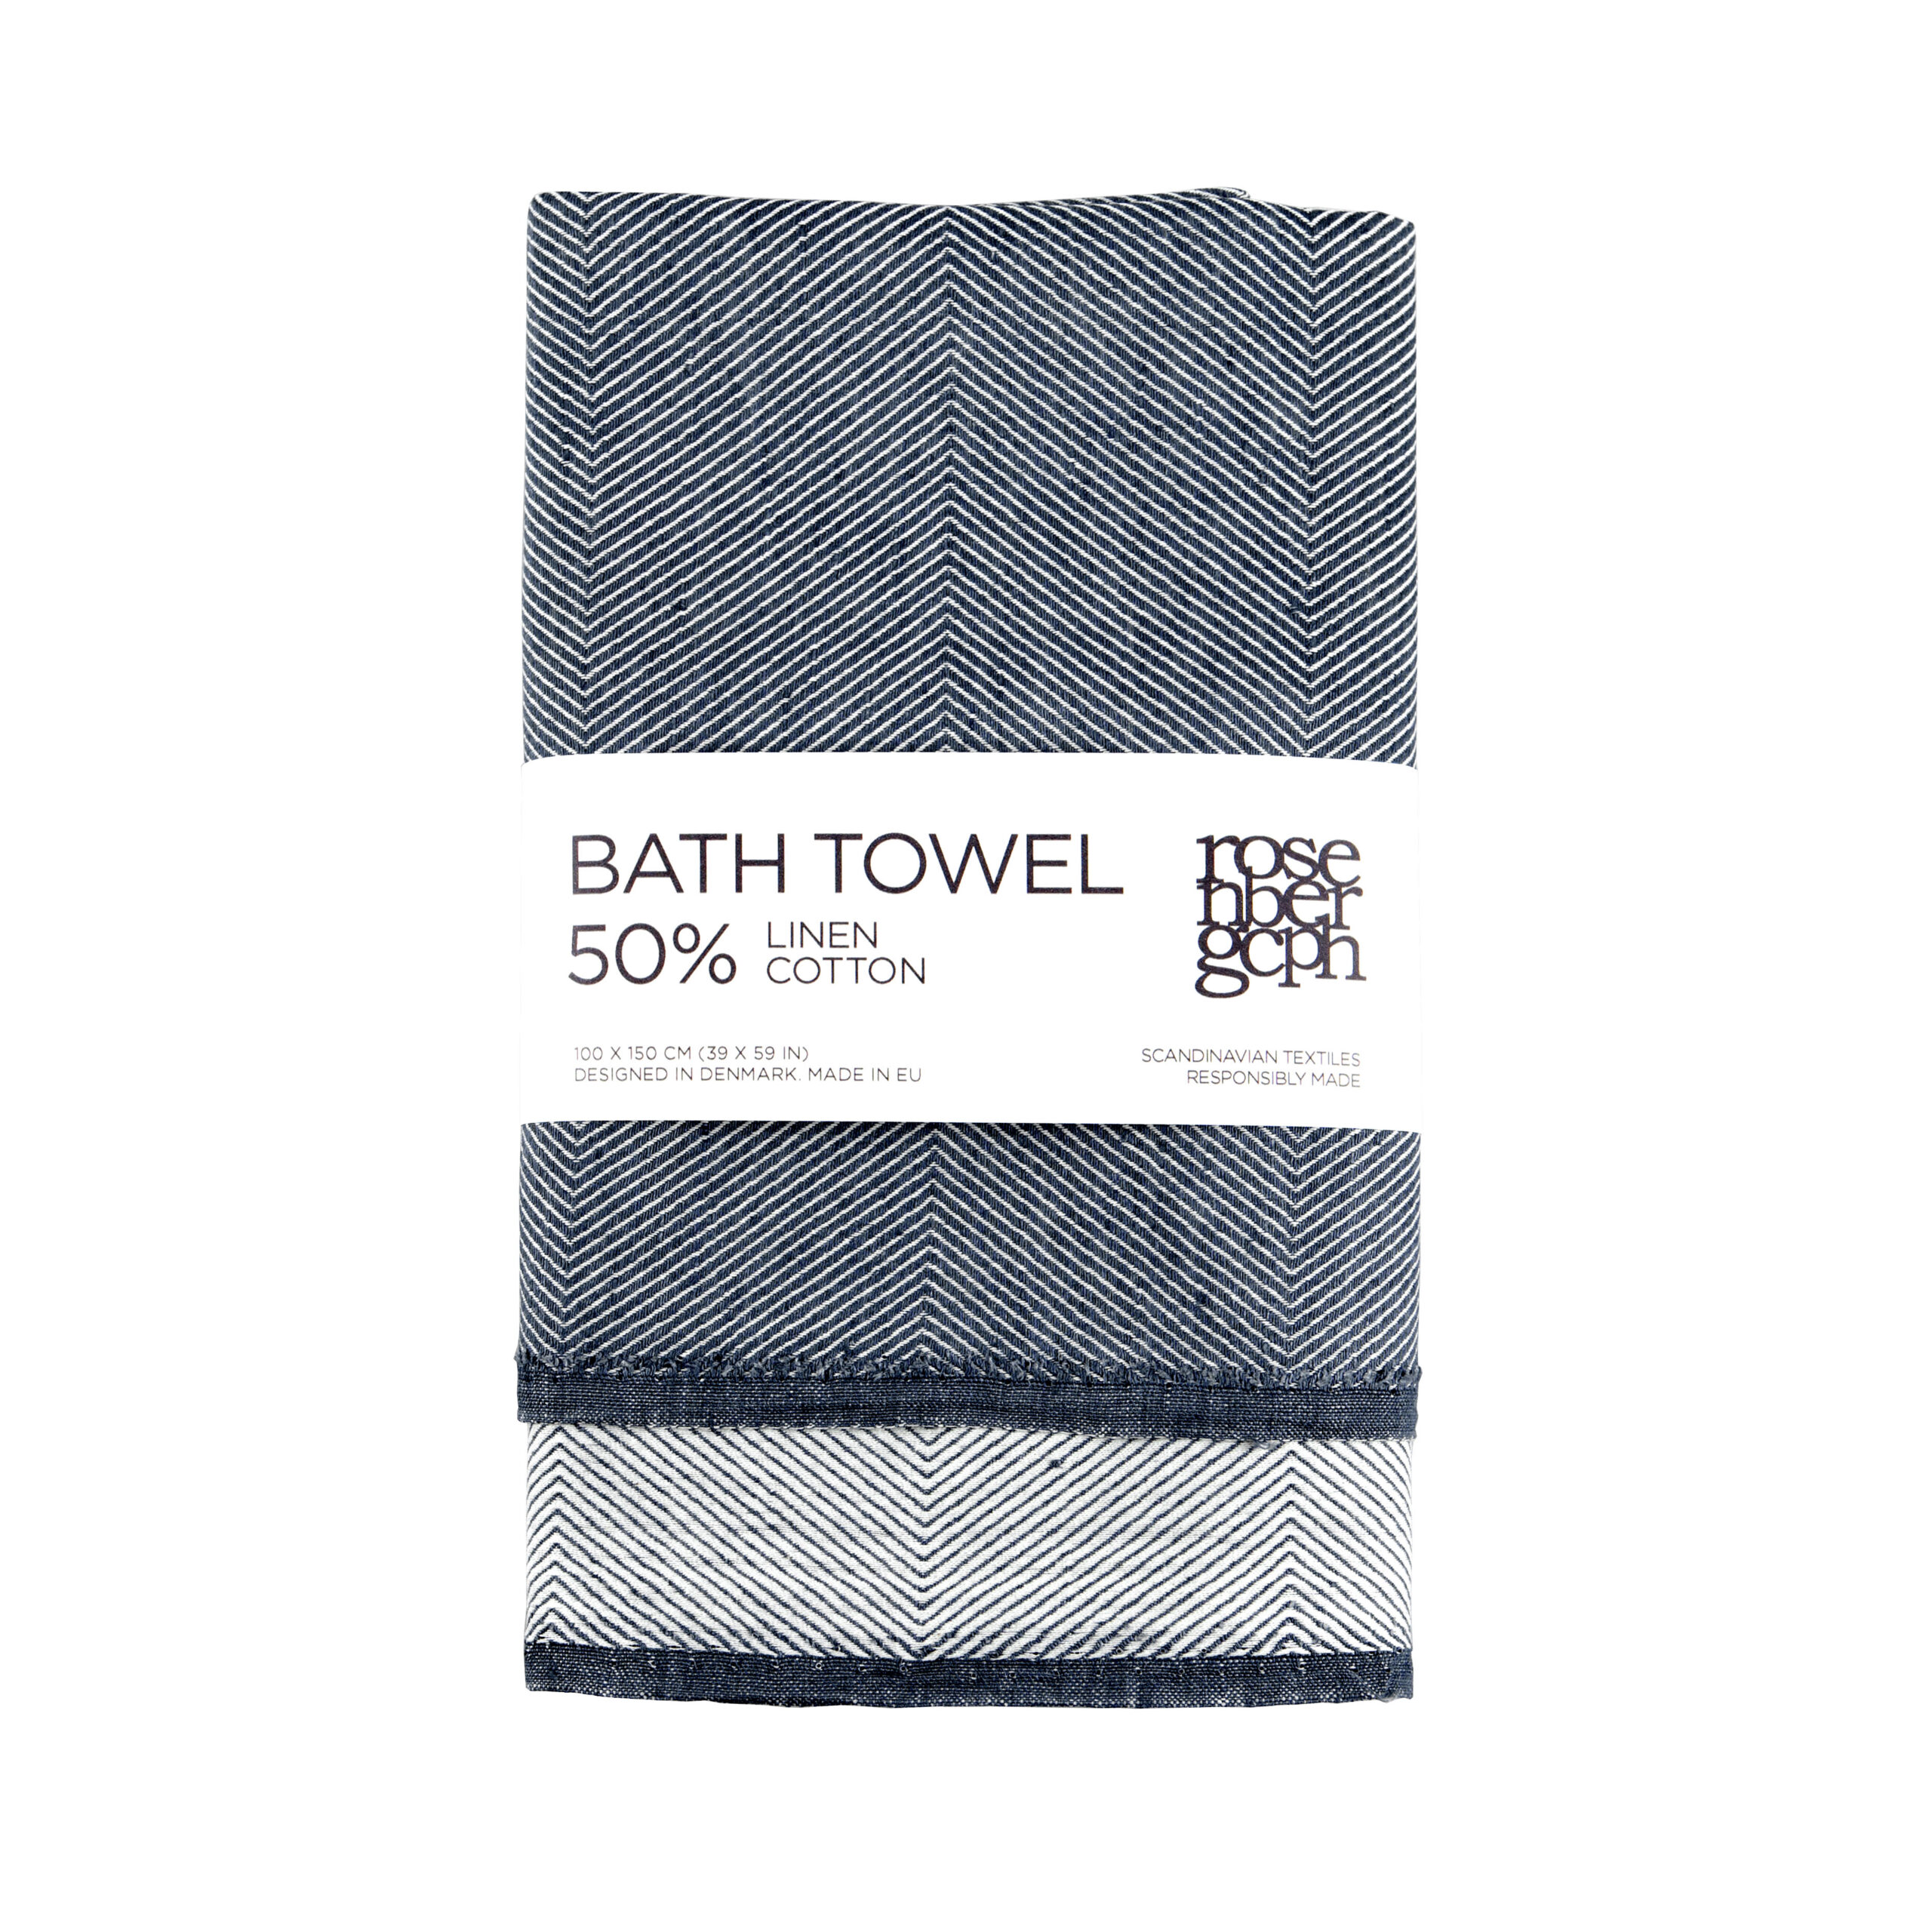 Bath towel, Indigo, linen/cotton, design by Anne Rosenberg, RosenbergCph